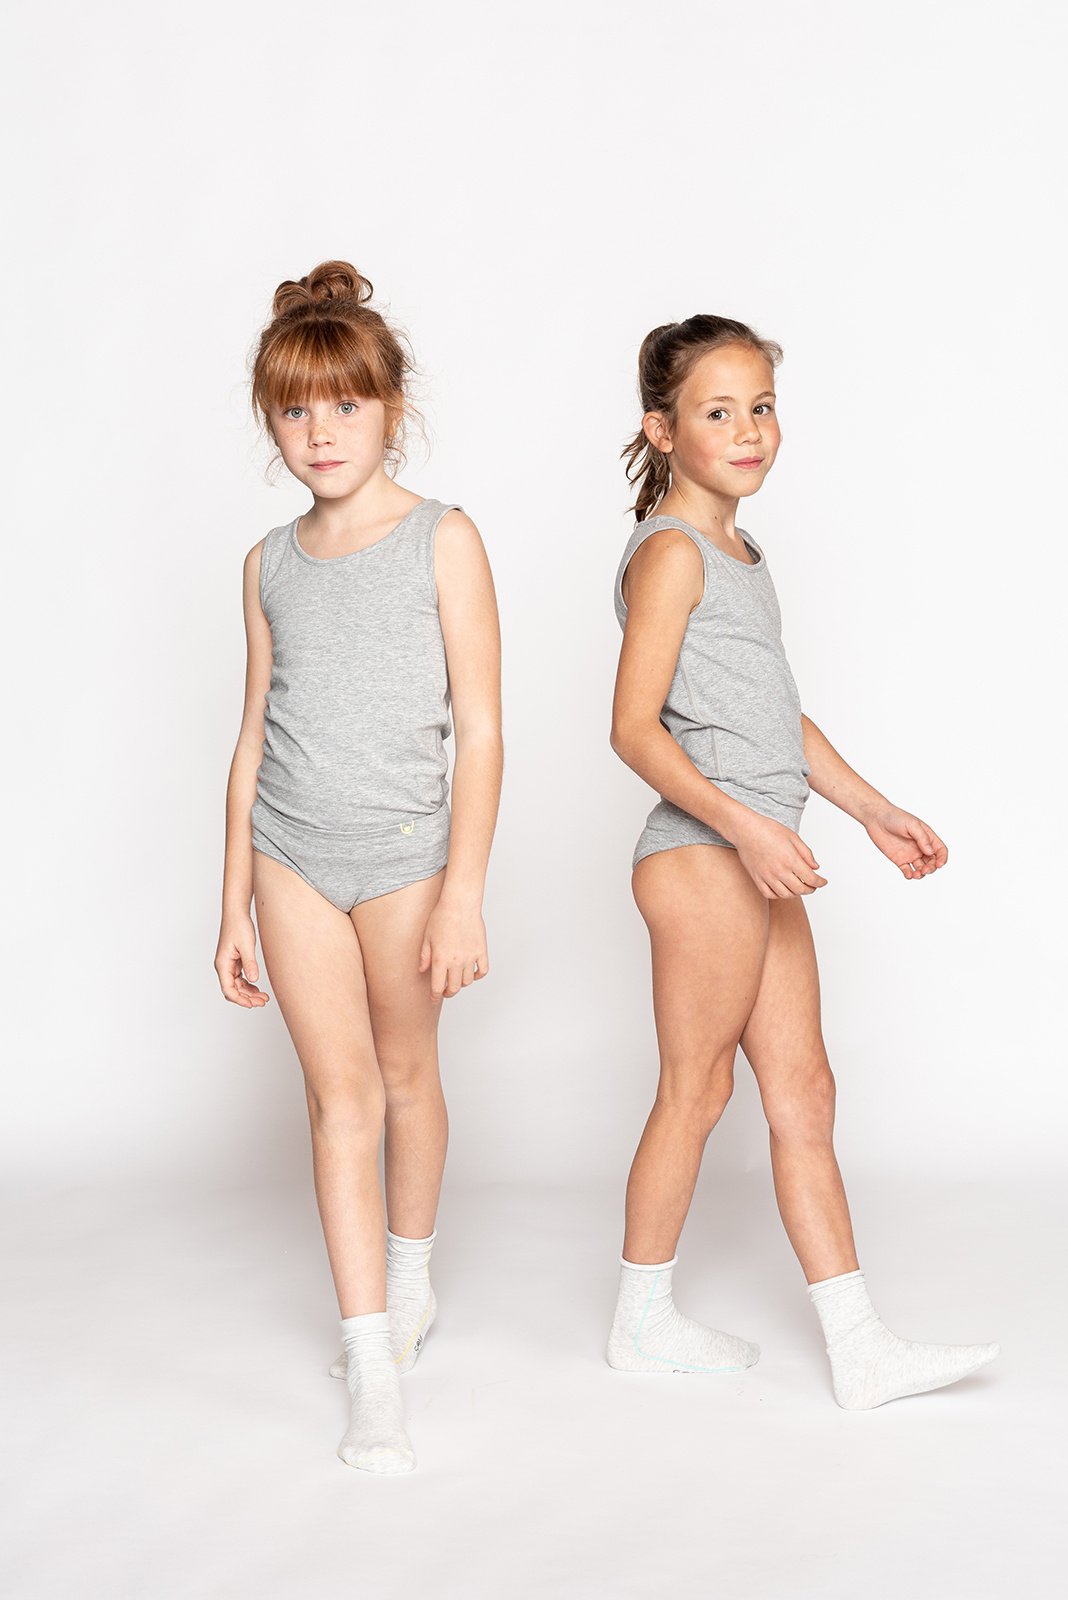 Ketyyh-chn99 Girls' Cotton Briefs Girls' Seamless Brief Underwear Girls  Underwear Panties Briefs for Girls Teen (3 Pack) Red,8-10 Years